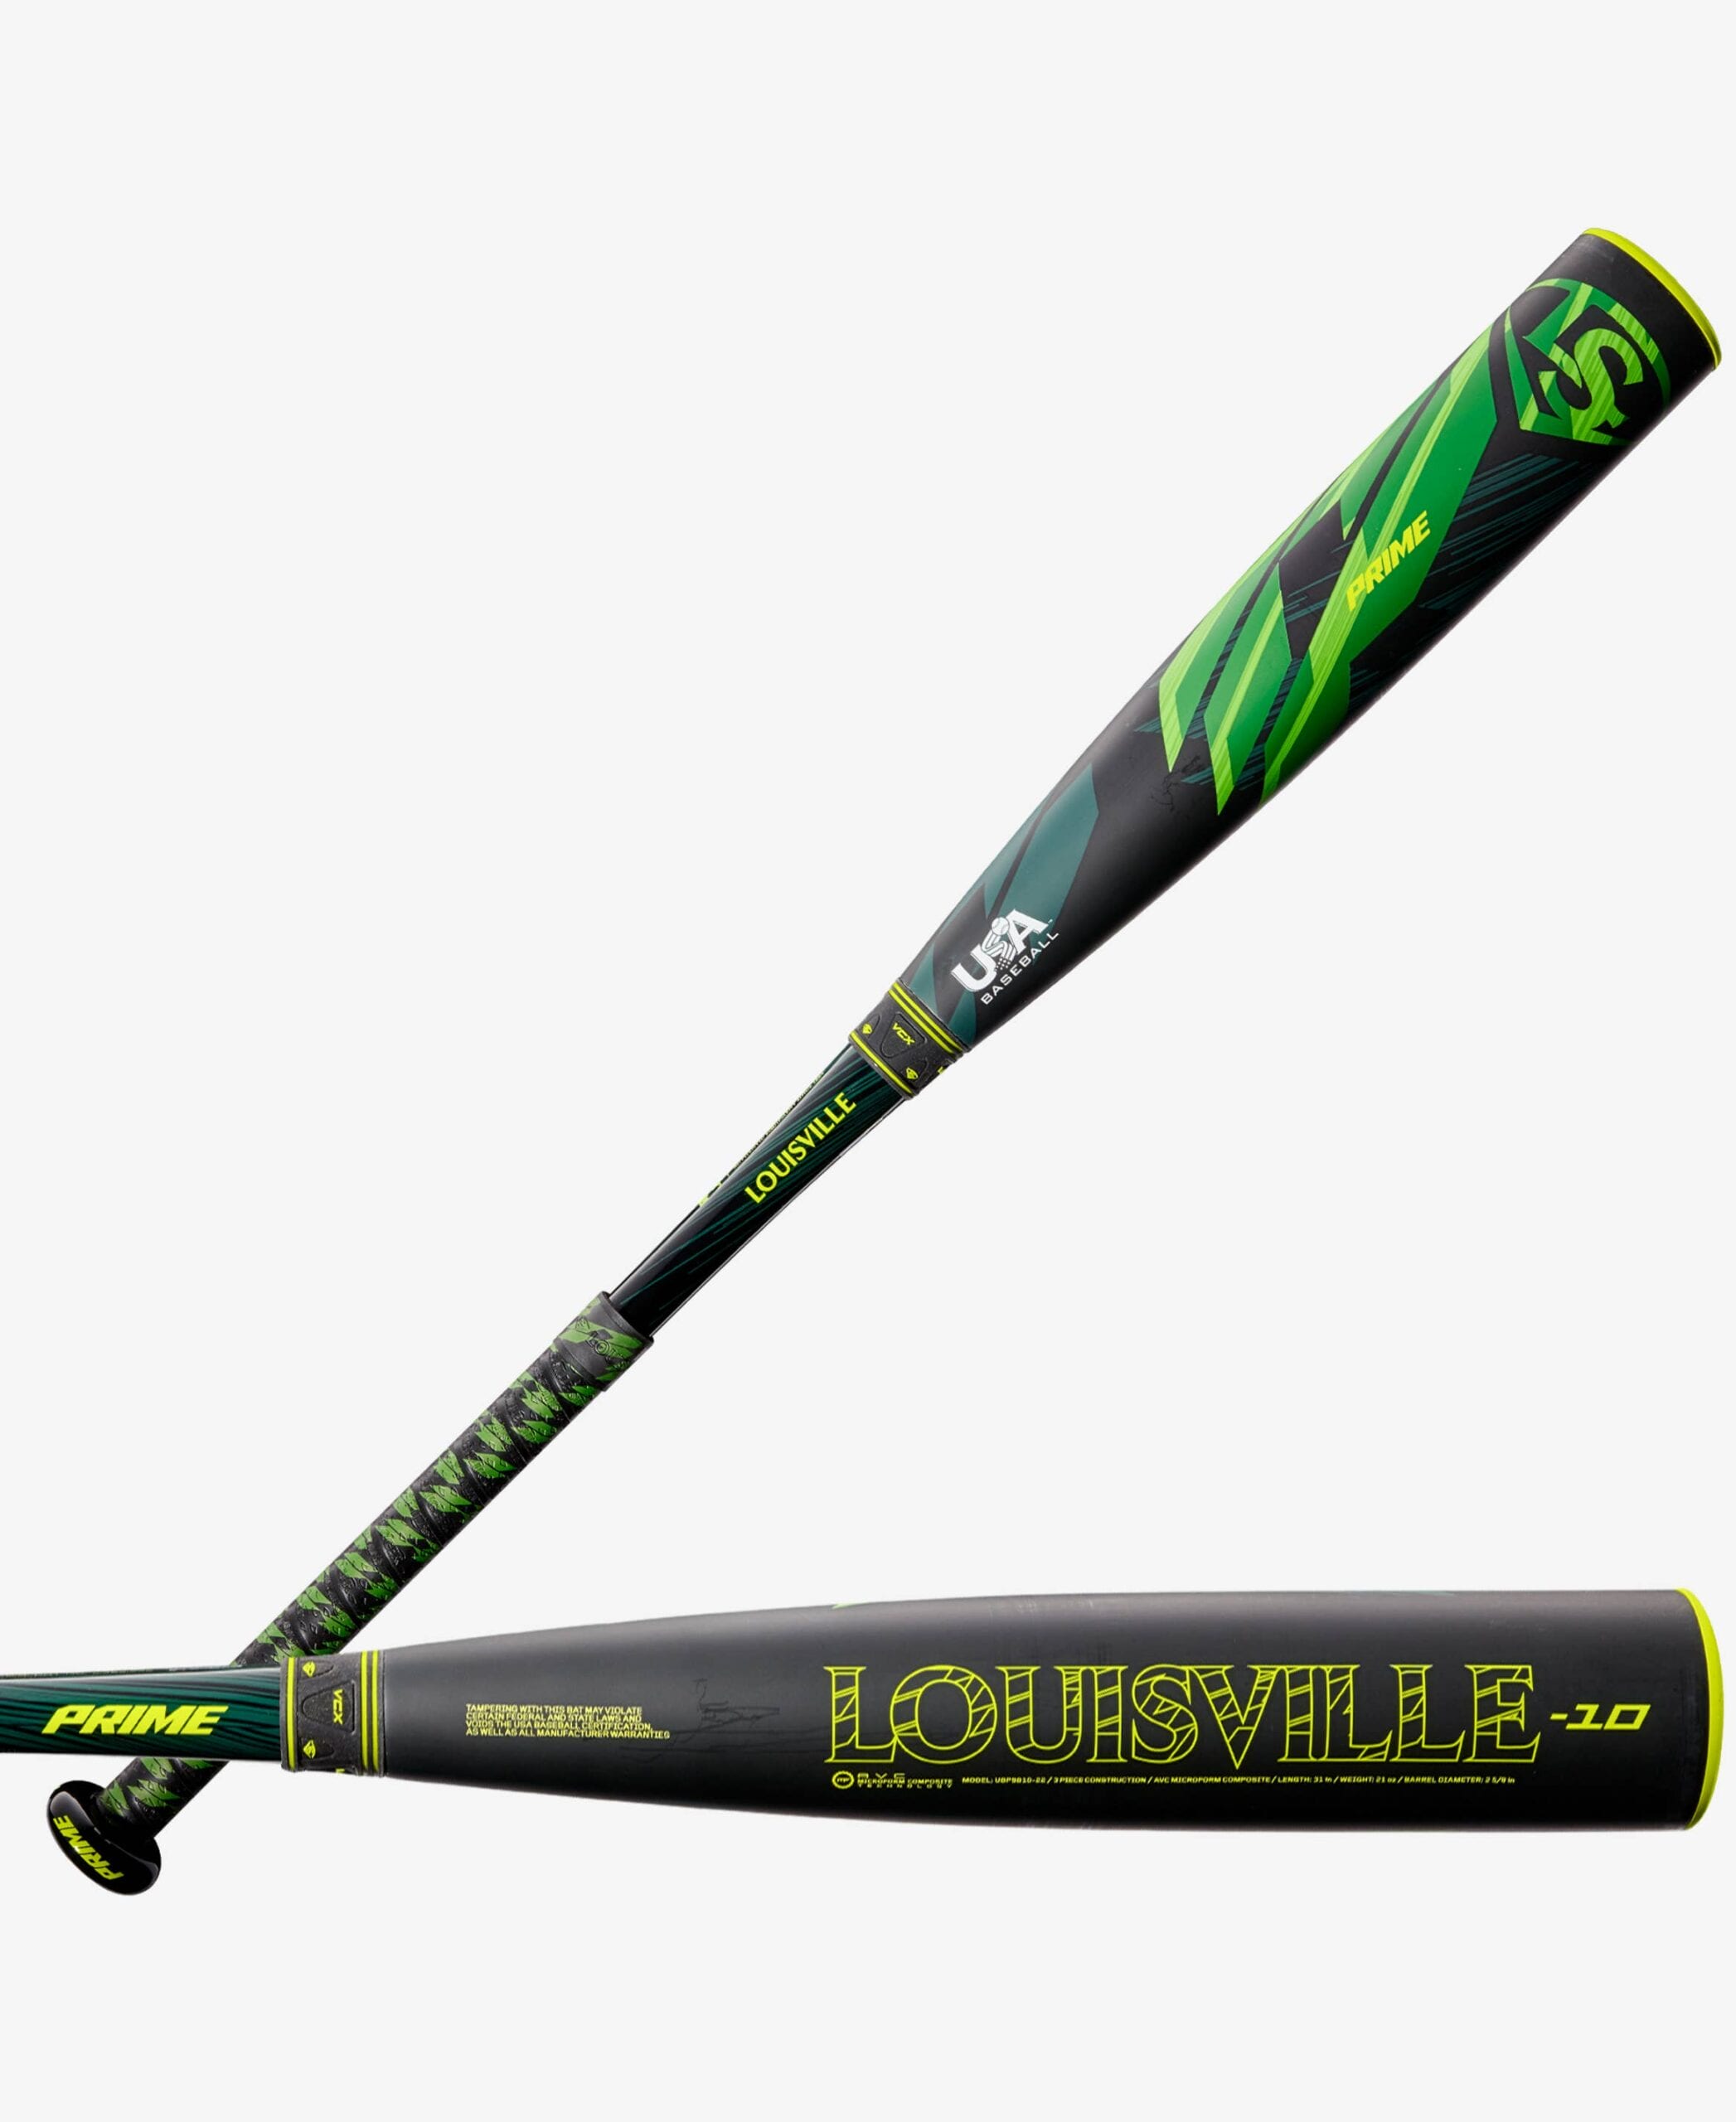 Louisville Slugger Usa Bat